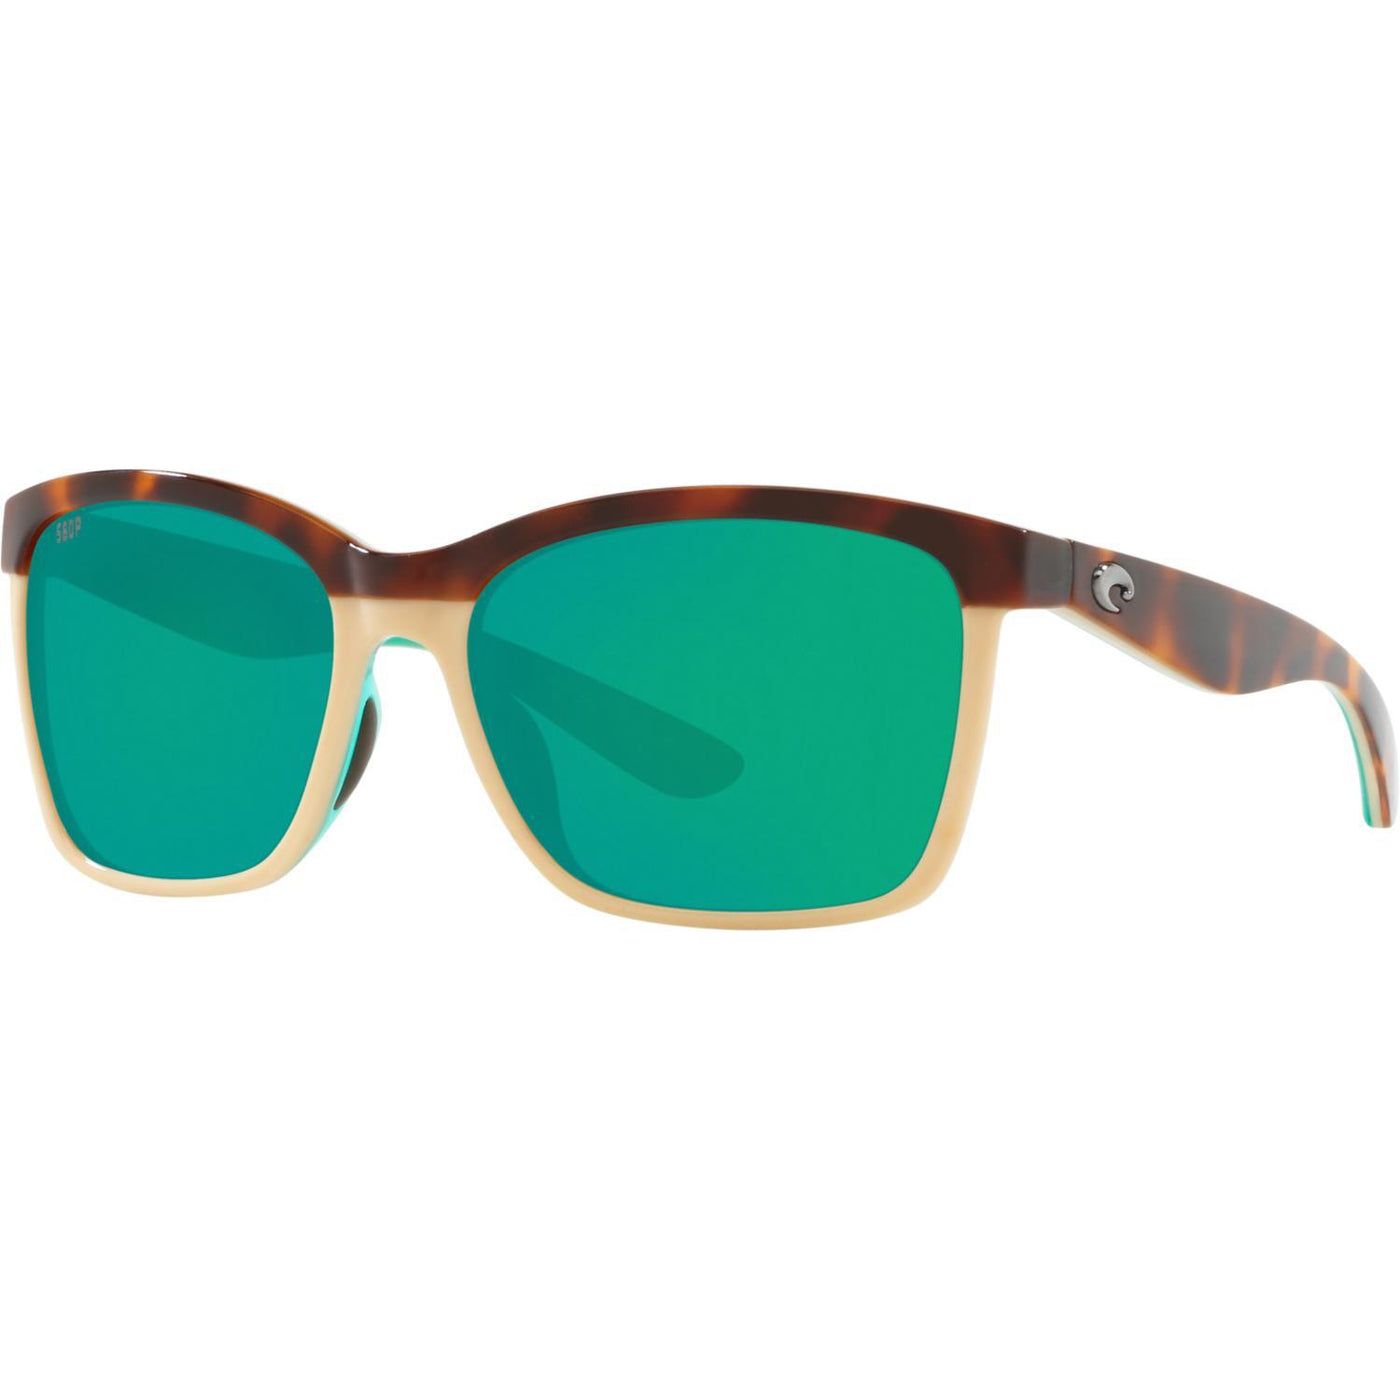 Costa "Anaa" Polarized Sunglasses-SUNGLASSES-Tortoise/Mint-Copper 580P-Kevin's Fine Outdoor Gear & Apparel